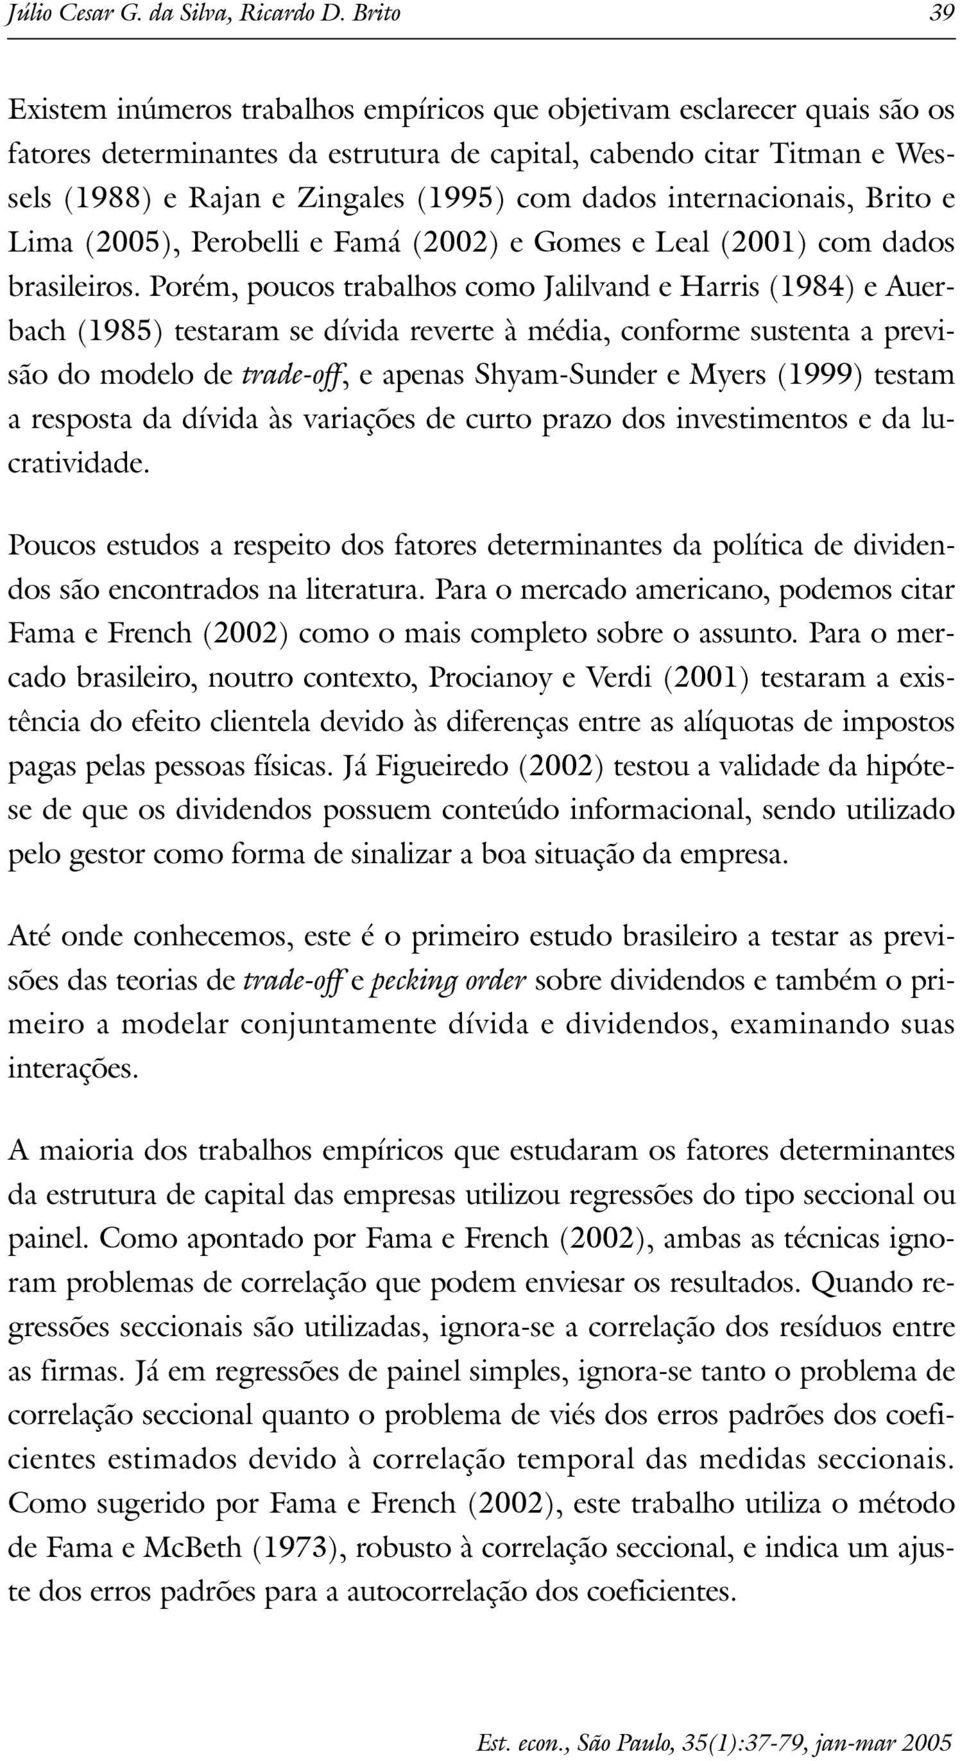 inernacionais, Brio e Lima (2005), Perobelli e Famá (2002) e Gomes e Leal (2001) com dados brasileiros.